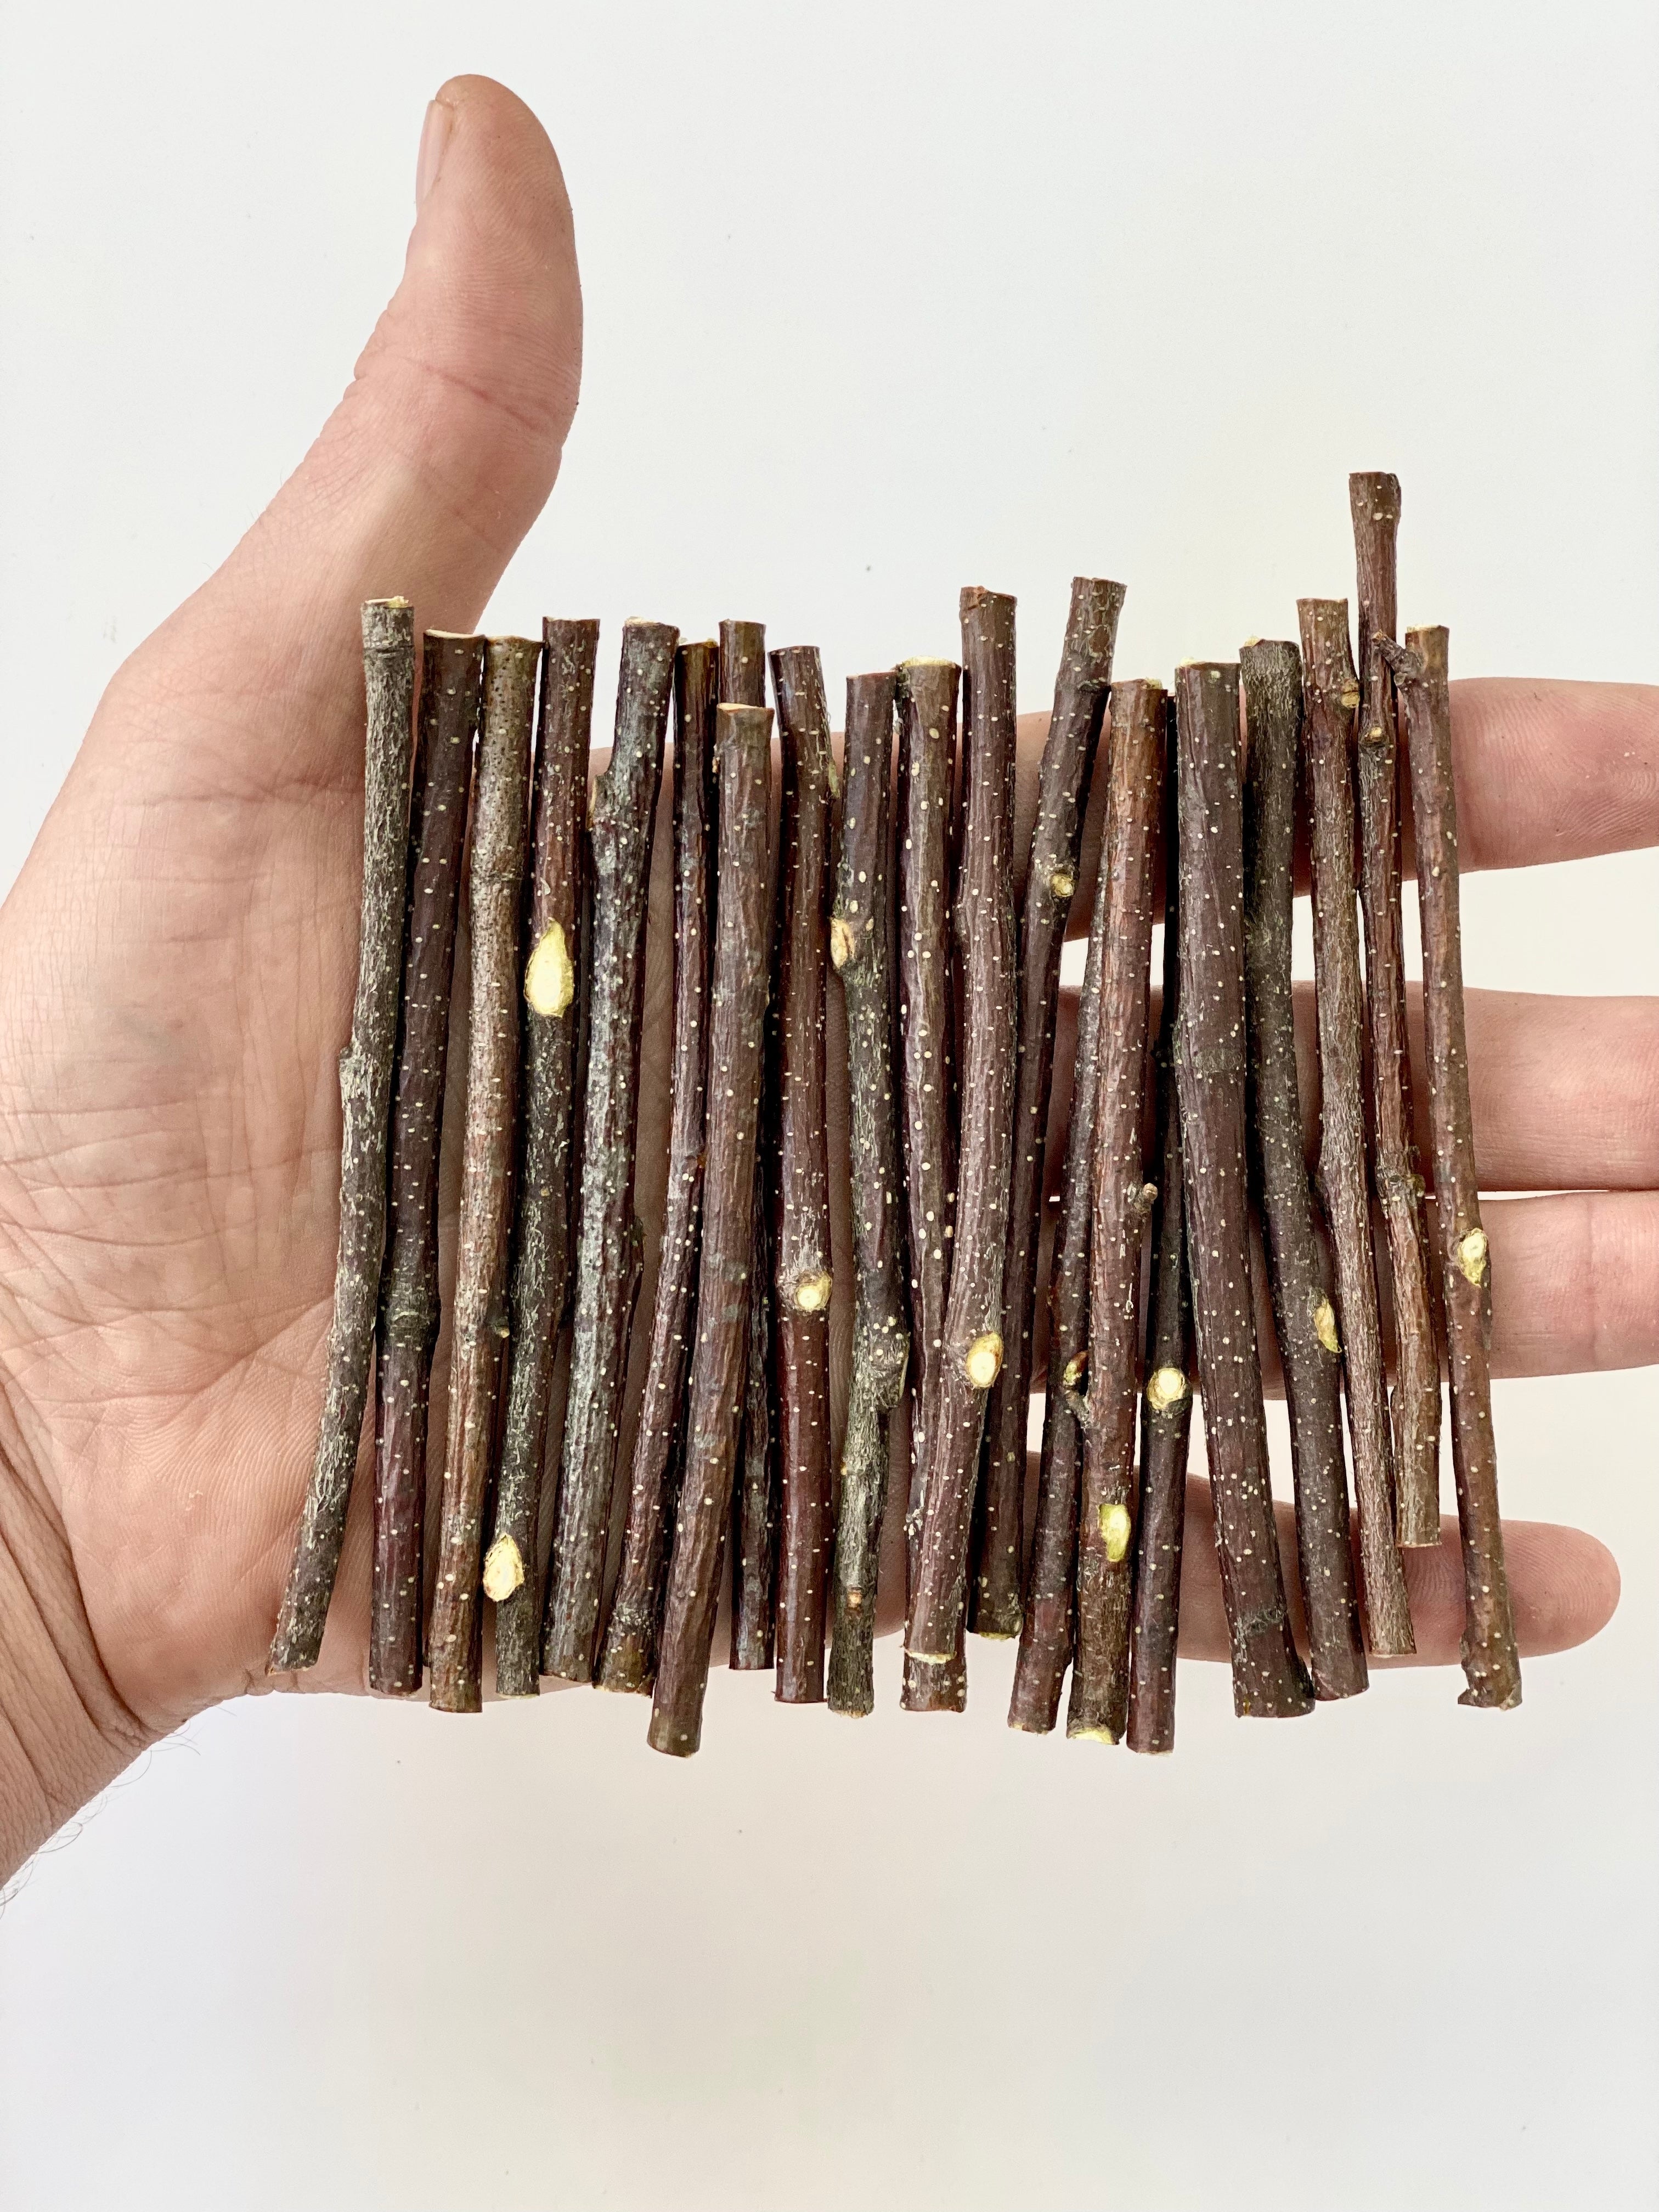 100 pcs Ecovenik Small Wood Sticks for Crafts - 4 Inch Birch Wood Craf –  ECOVENIK